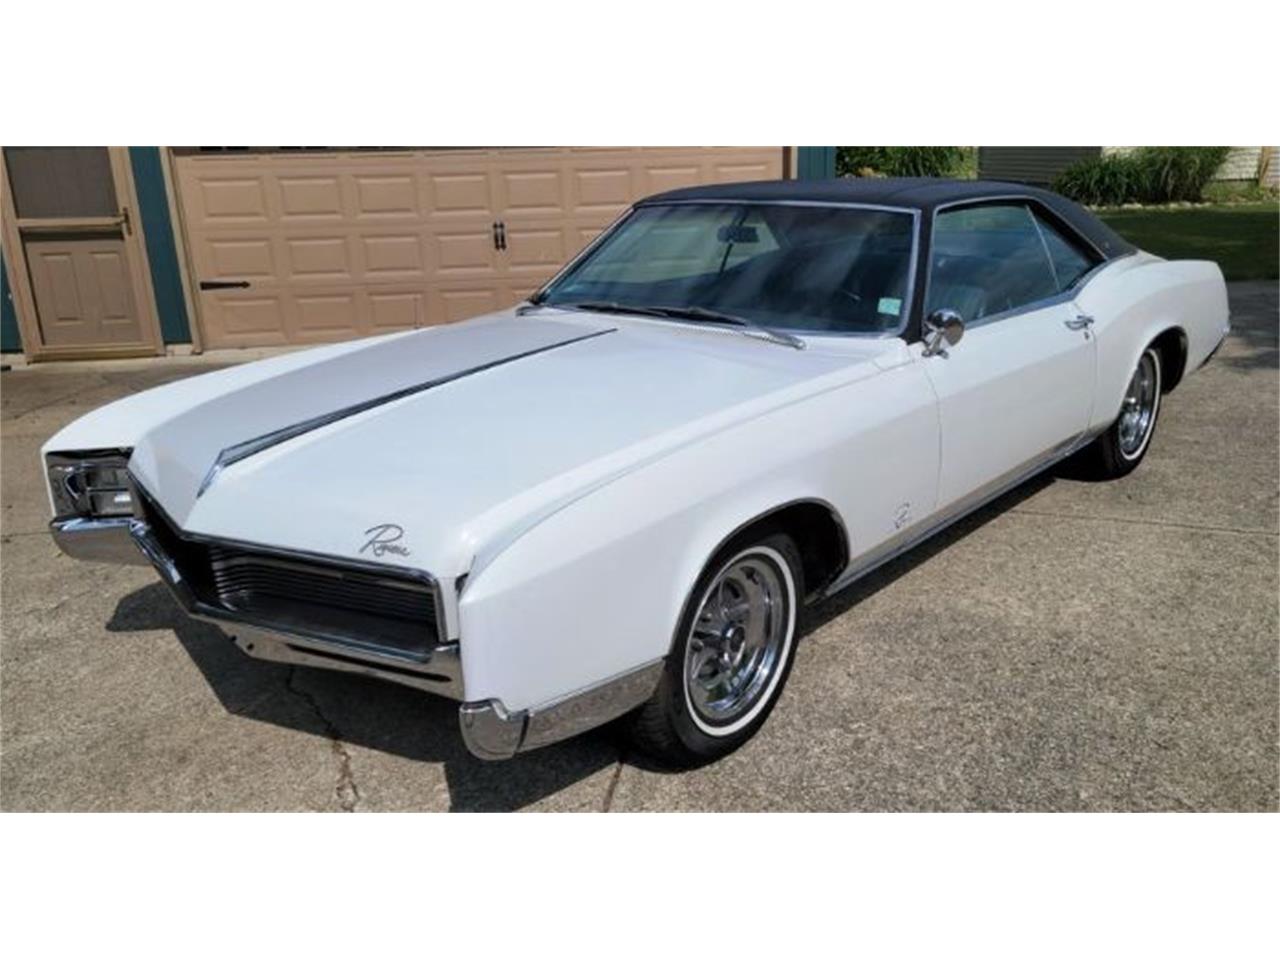 For Sale: 1967 Buick Riviera in Cadillac, Michigan for sale in Cadillac, MI